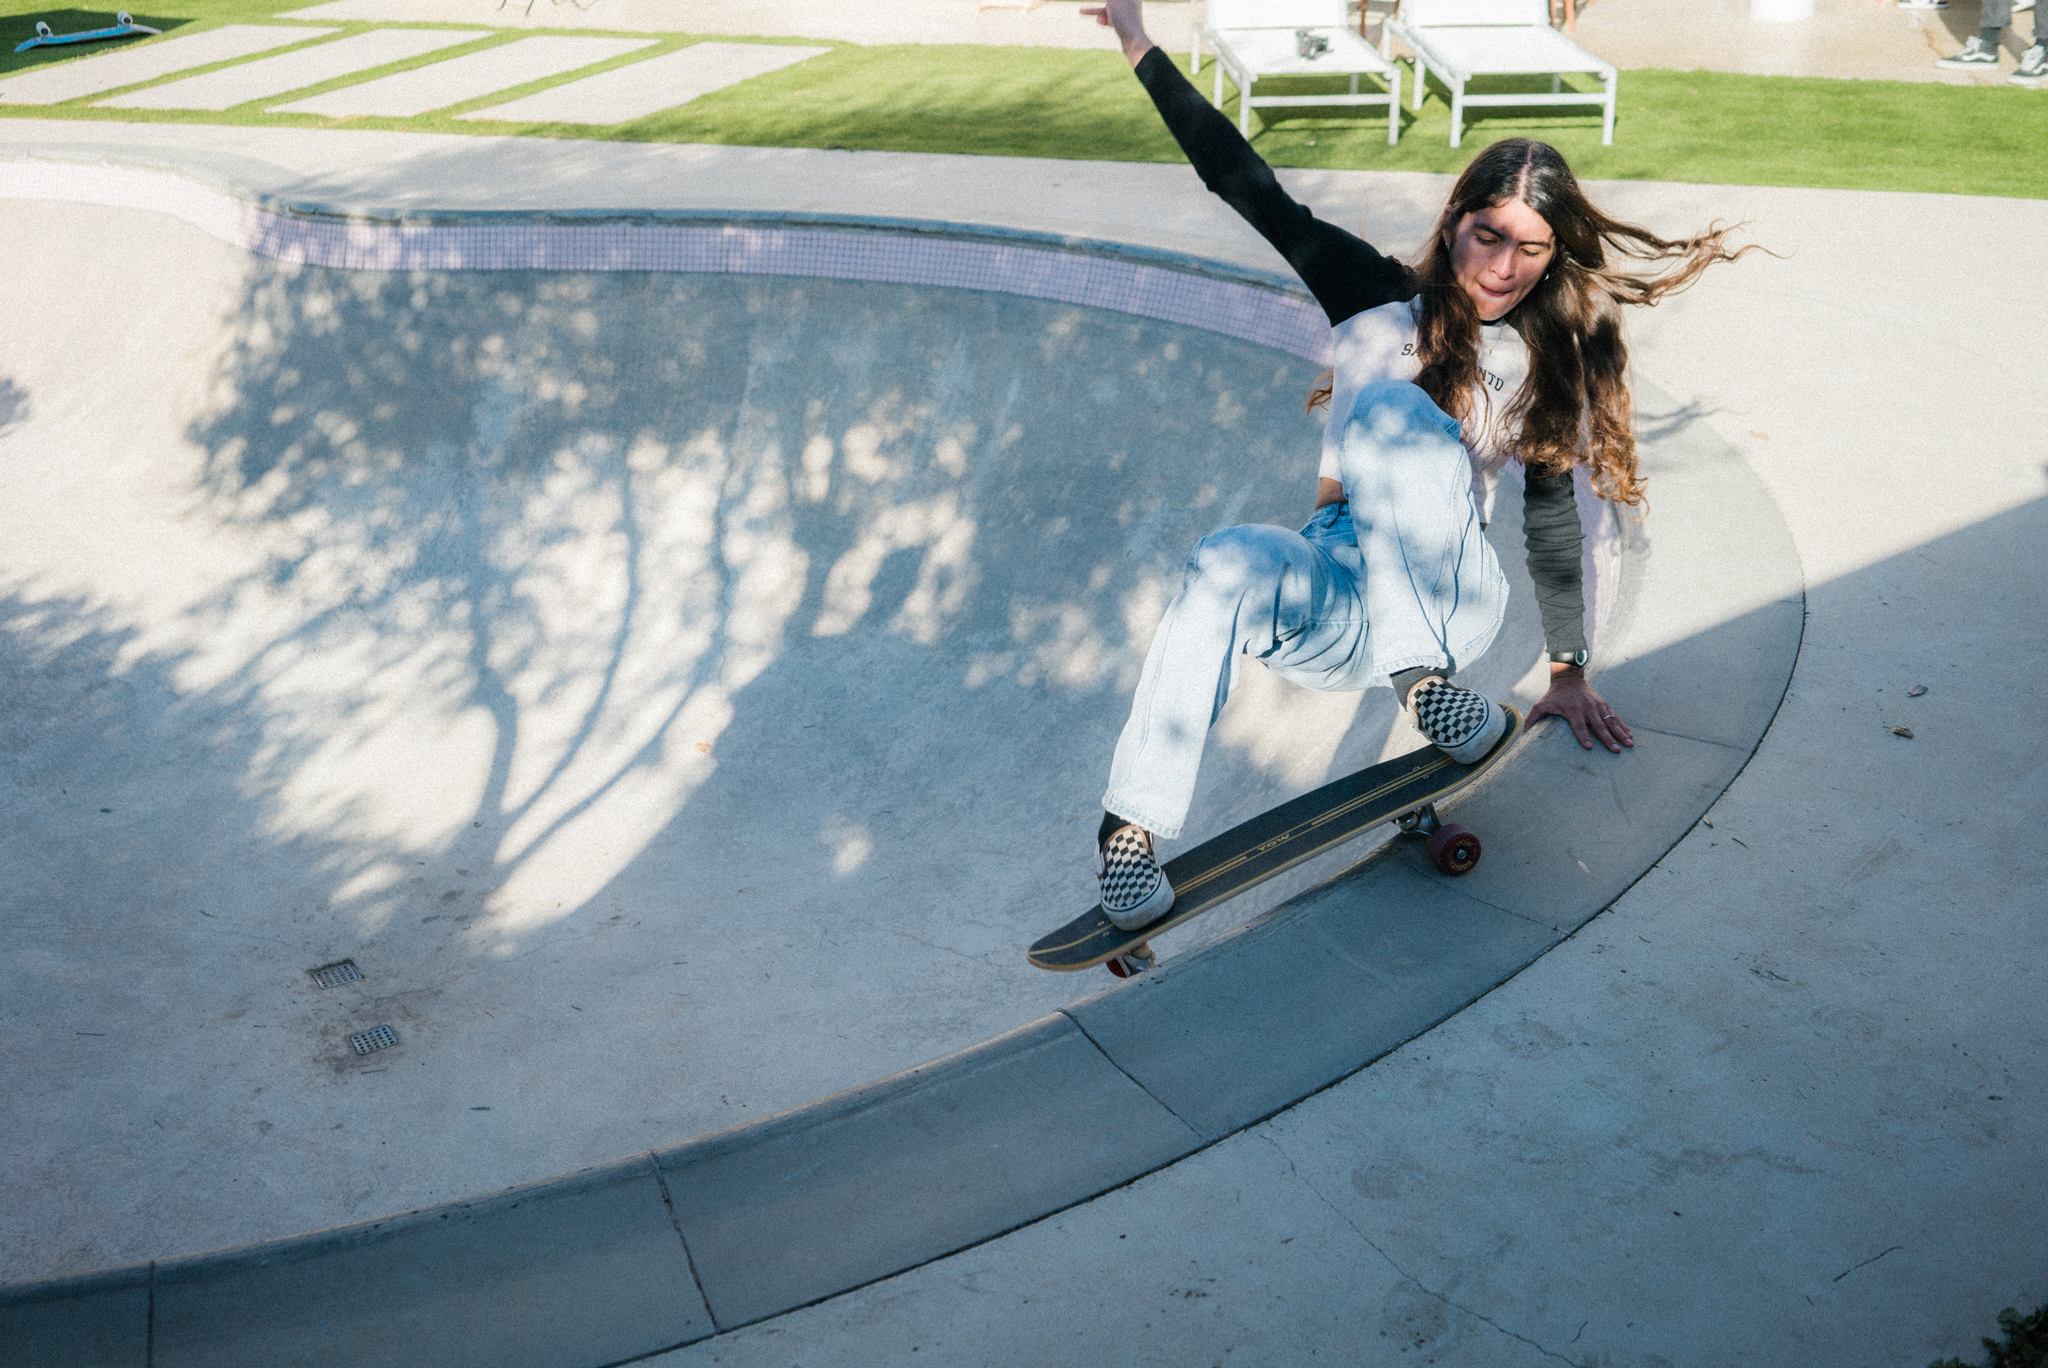 YOW Surf Cruiser: Zvez sa na vlne retro skateboardingu